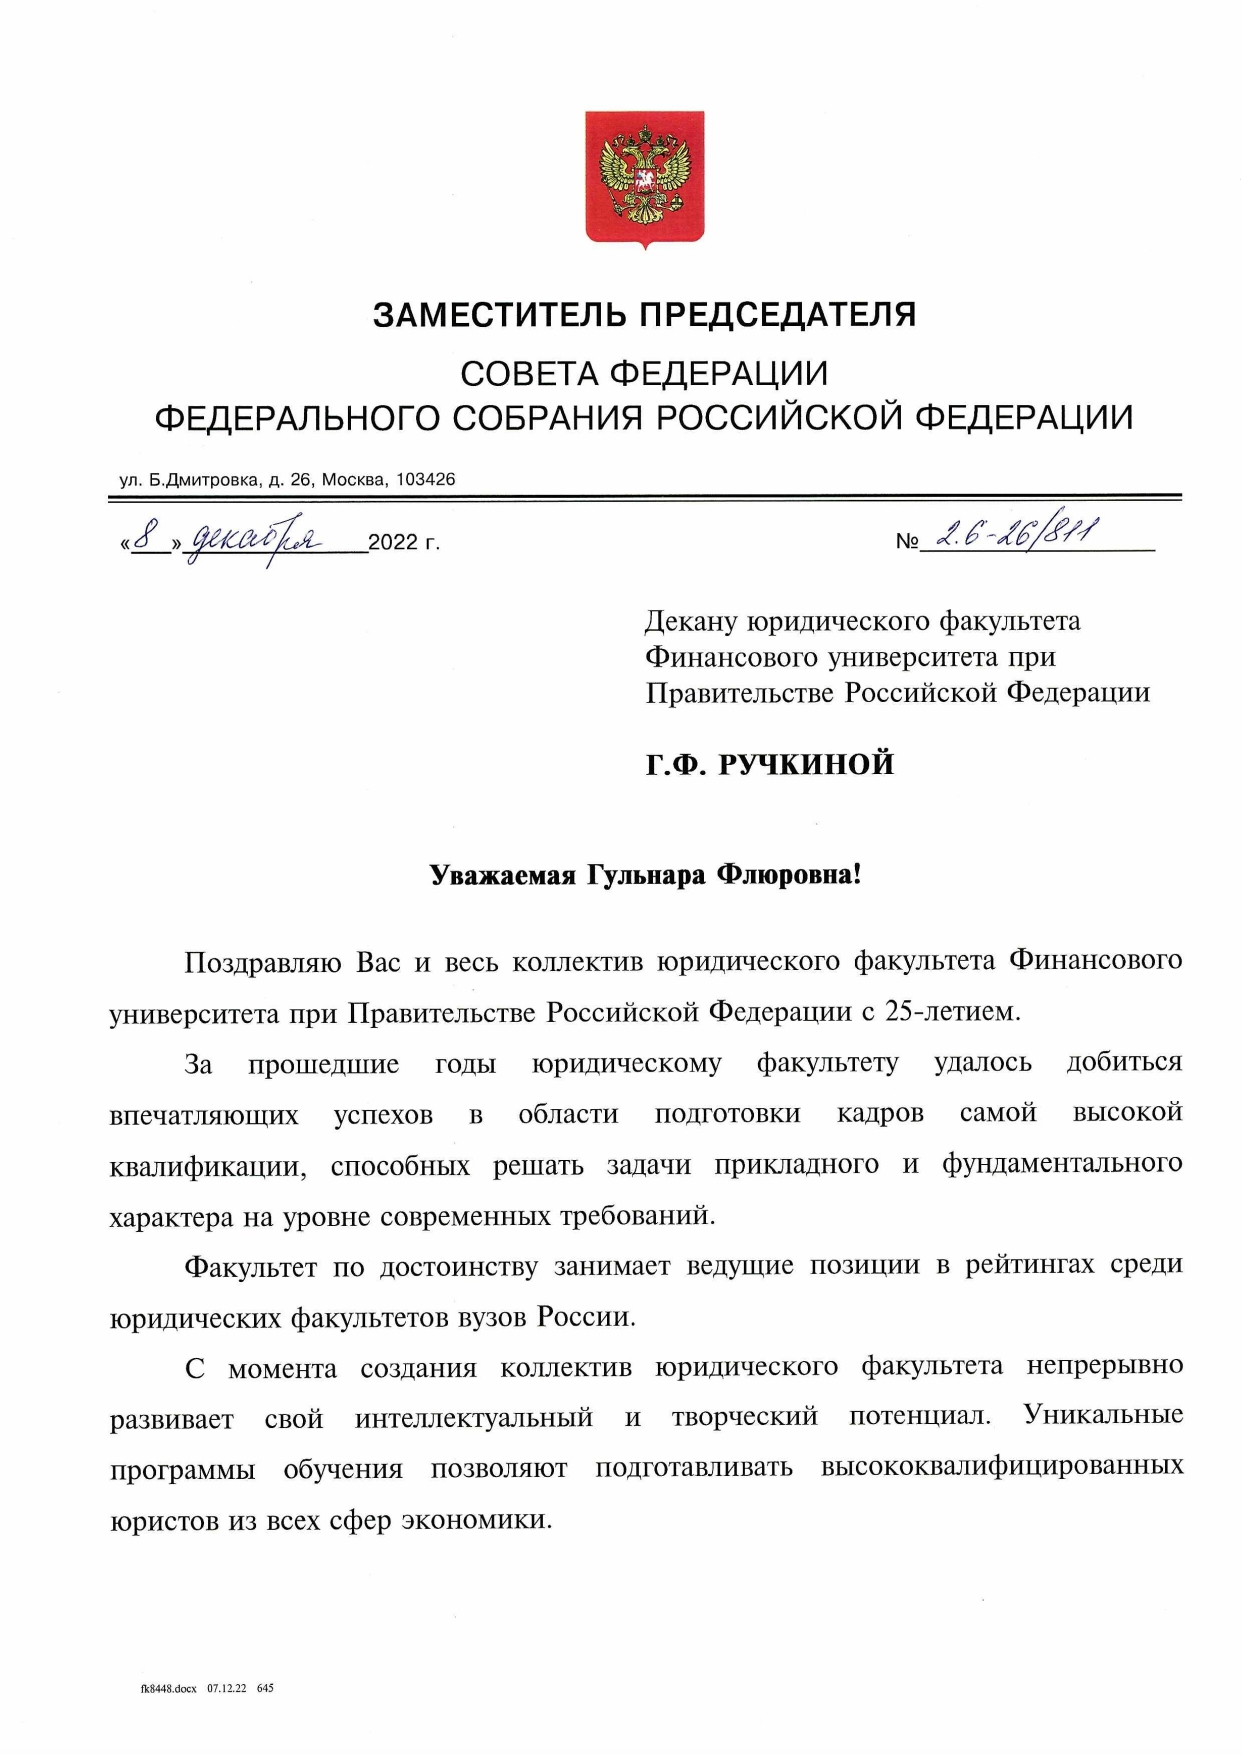 Поздравление Н.А. Журавлёва (1)_page-0001.jpg